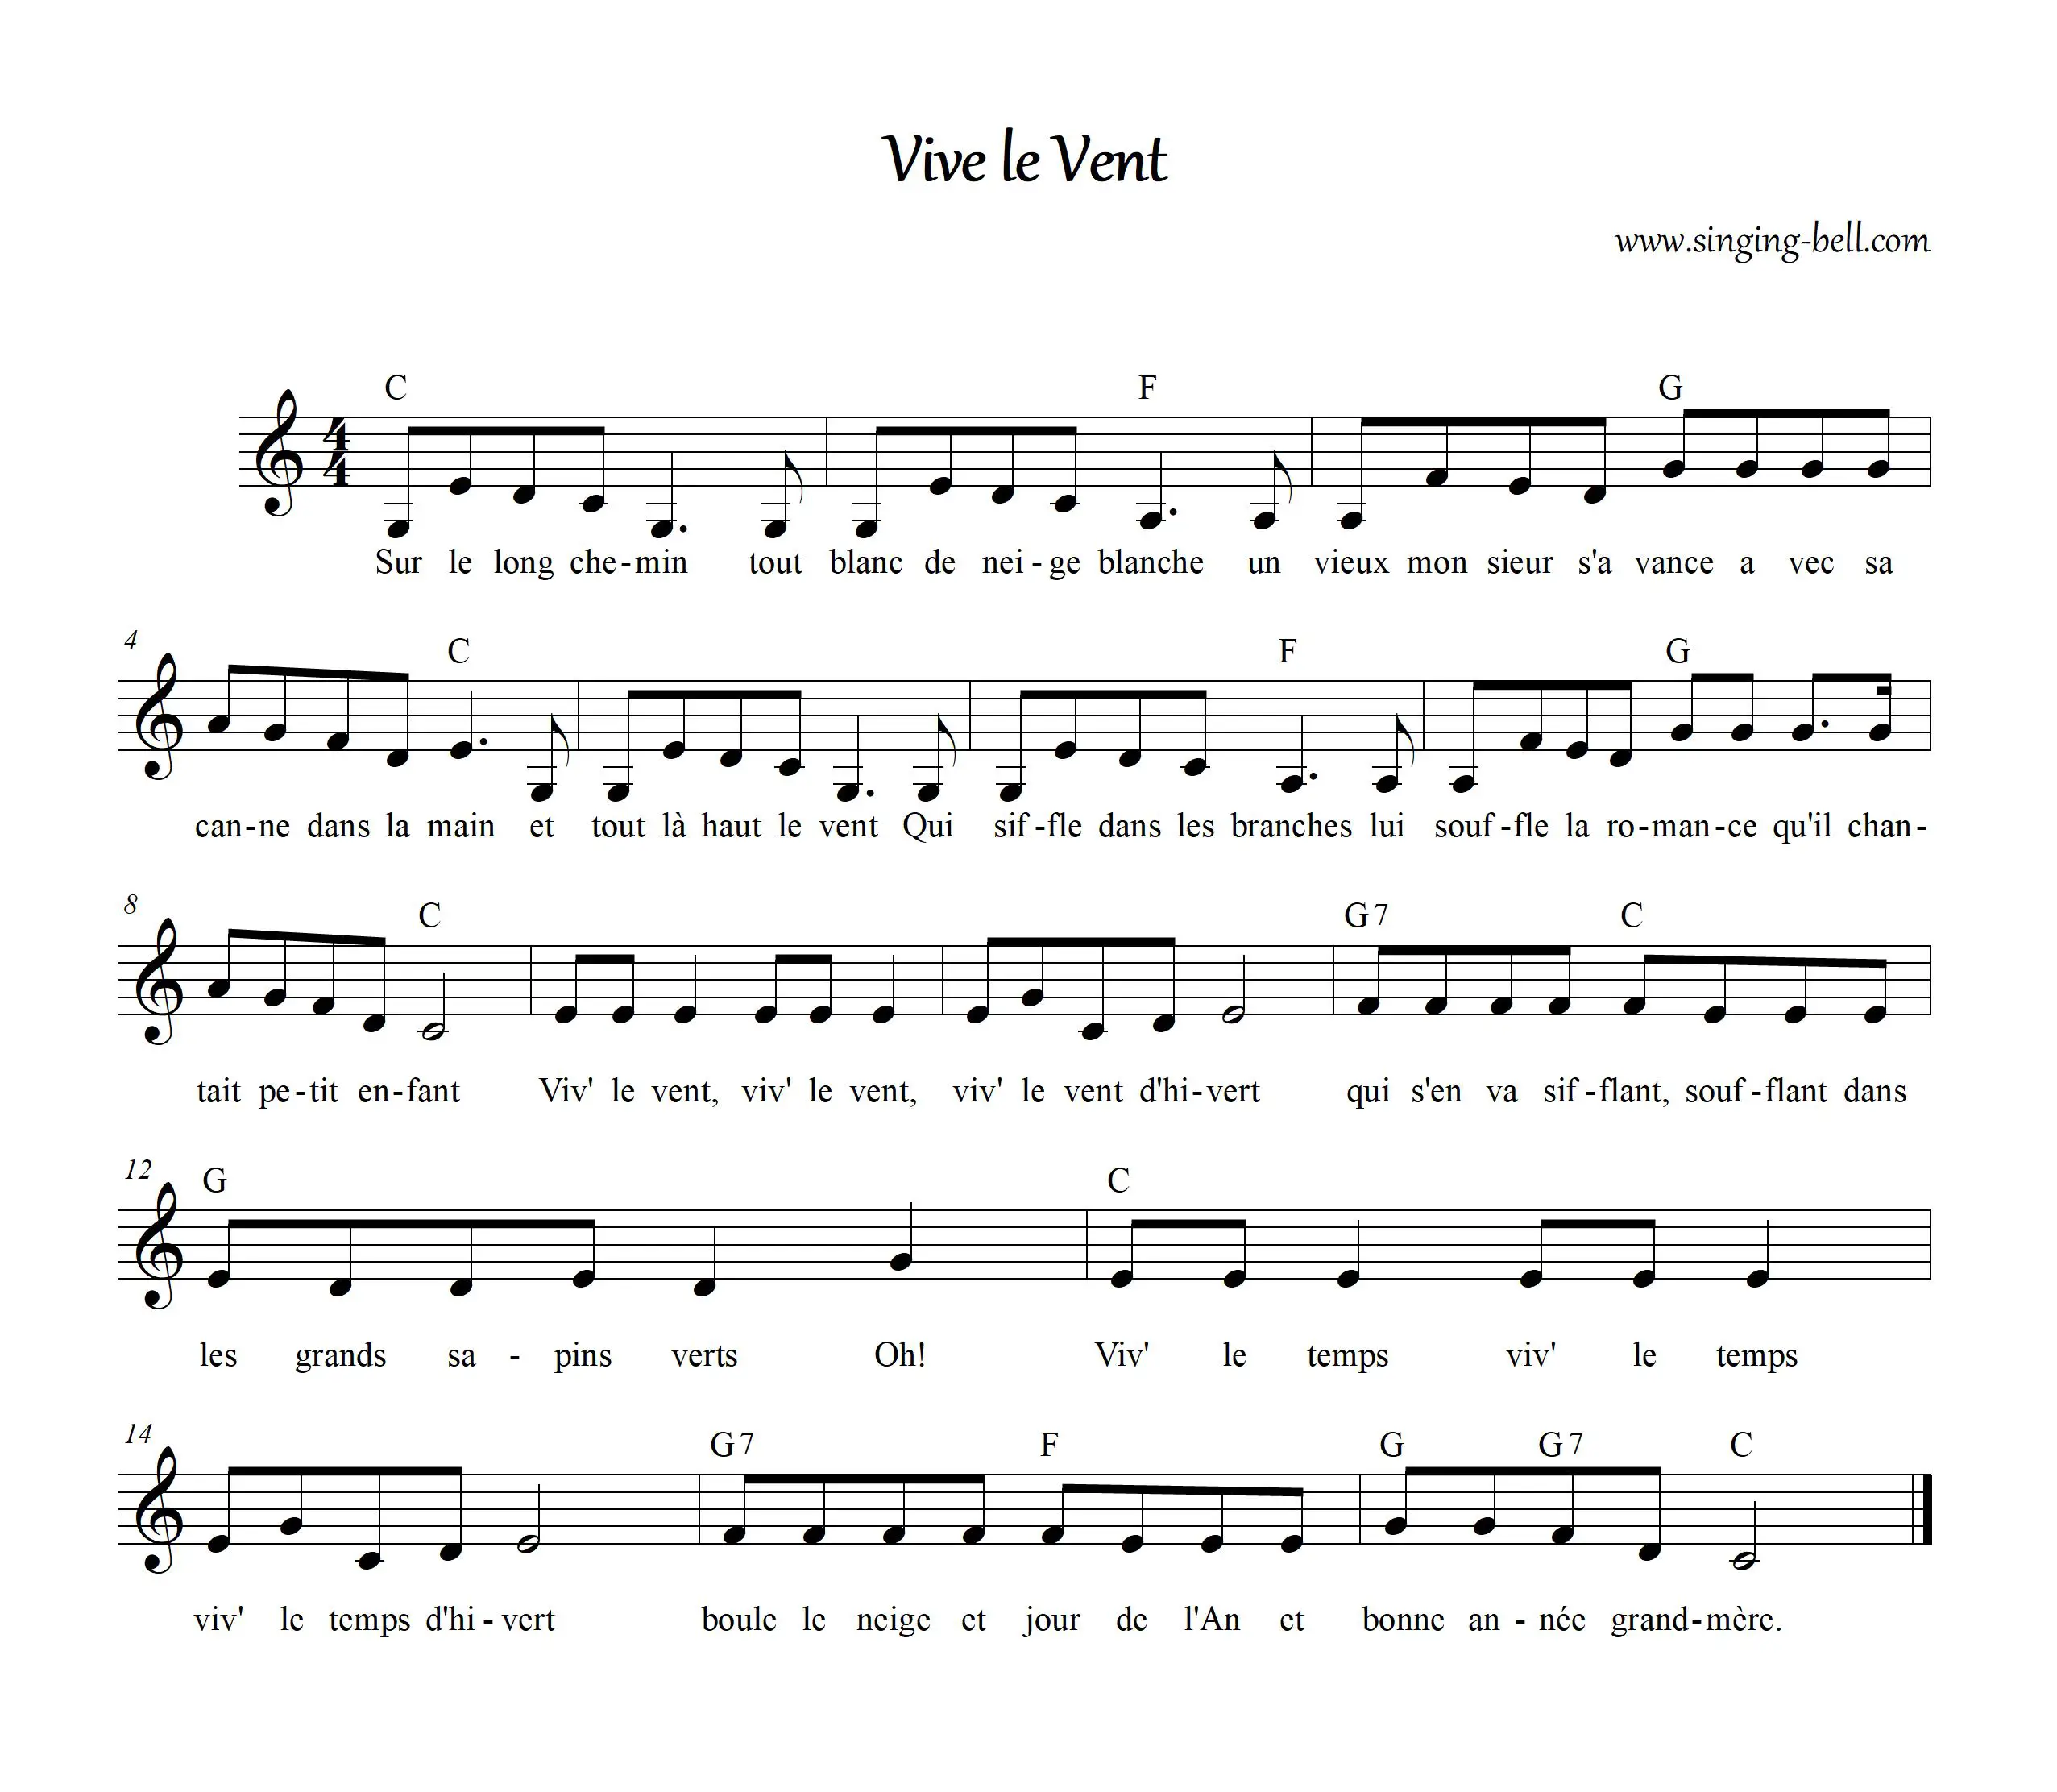 Vie le vent free sheet music chords pdf